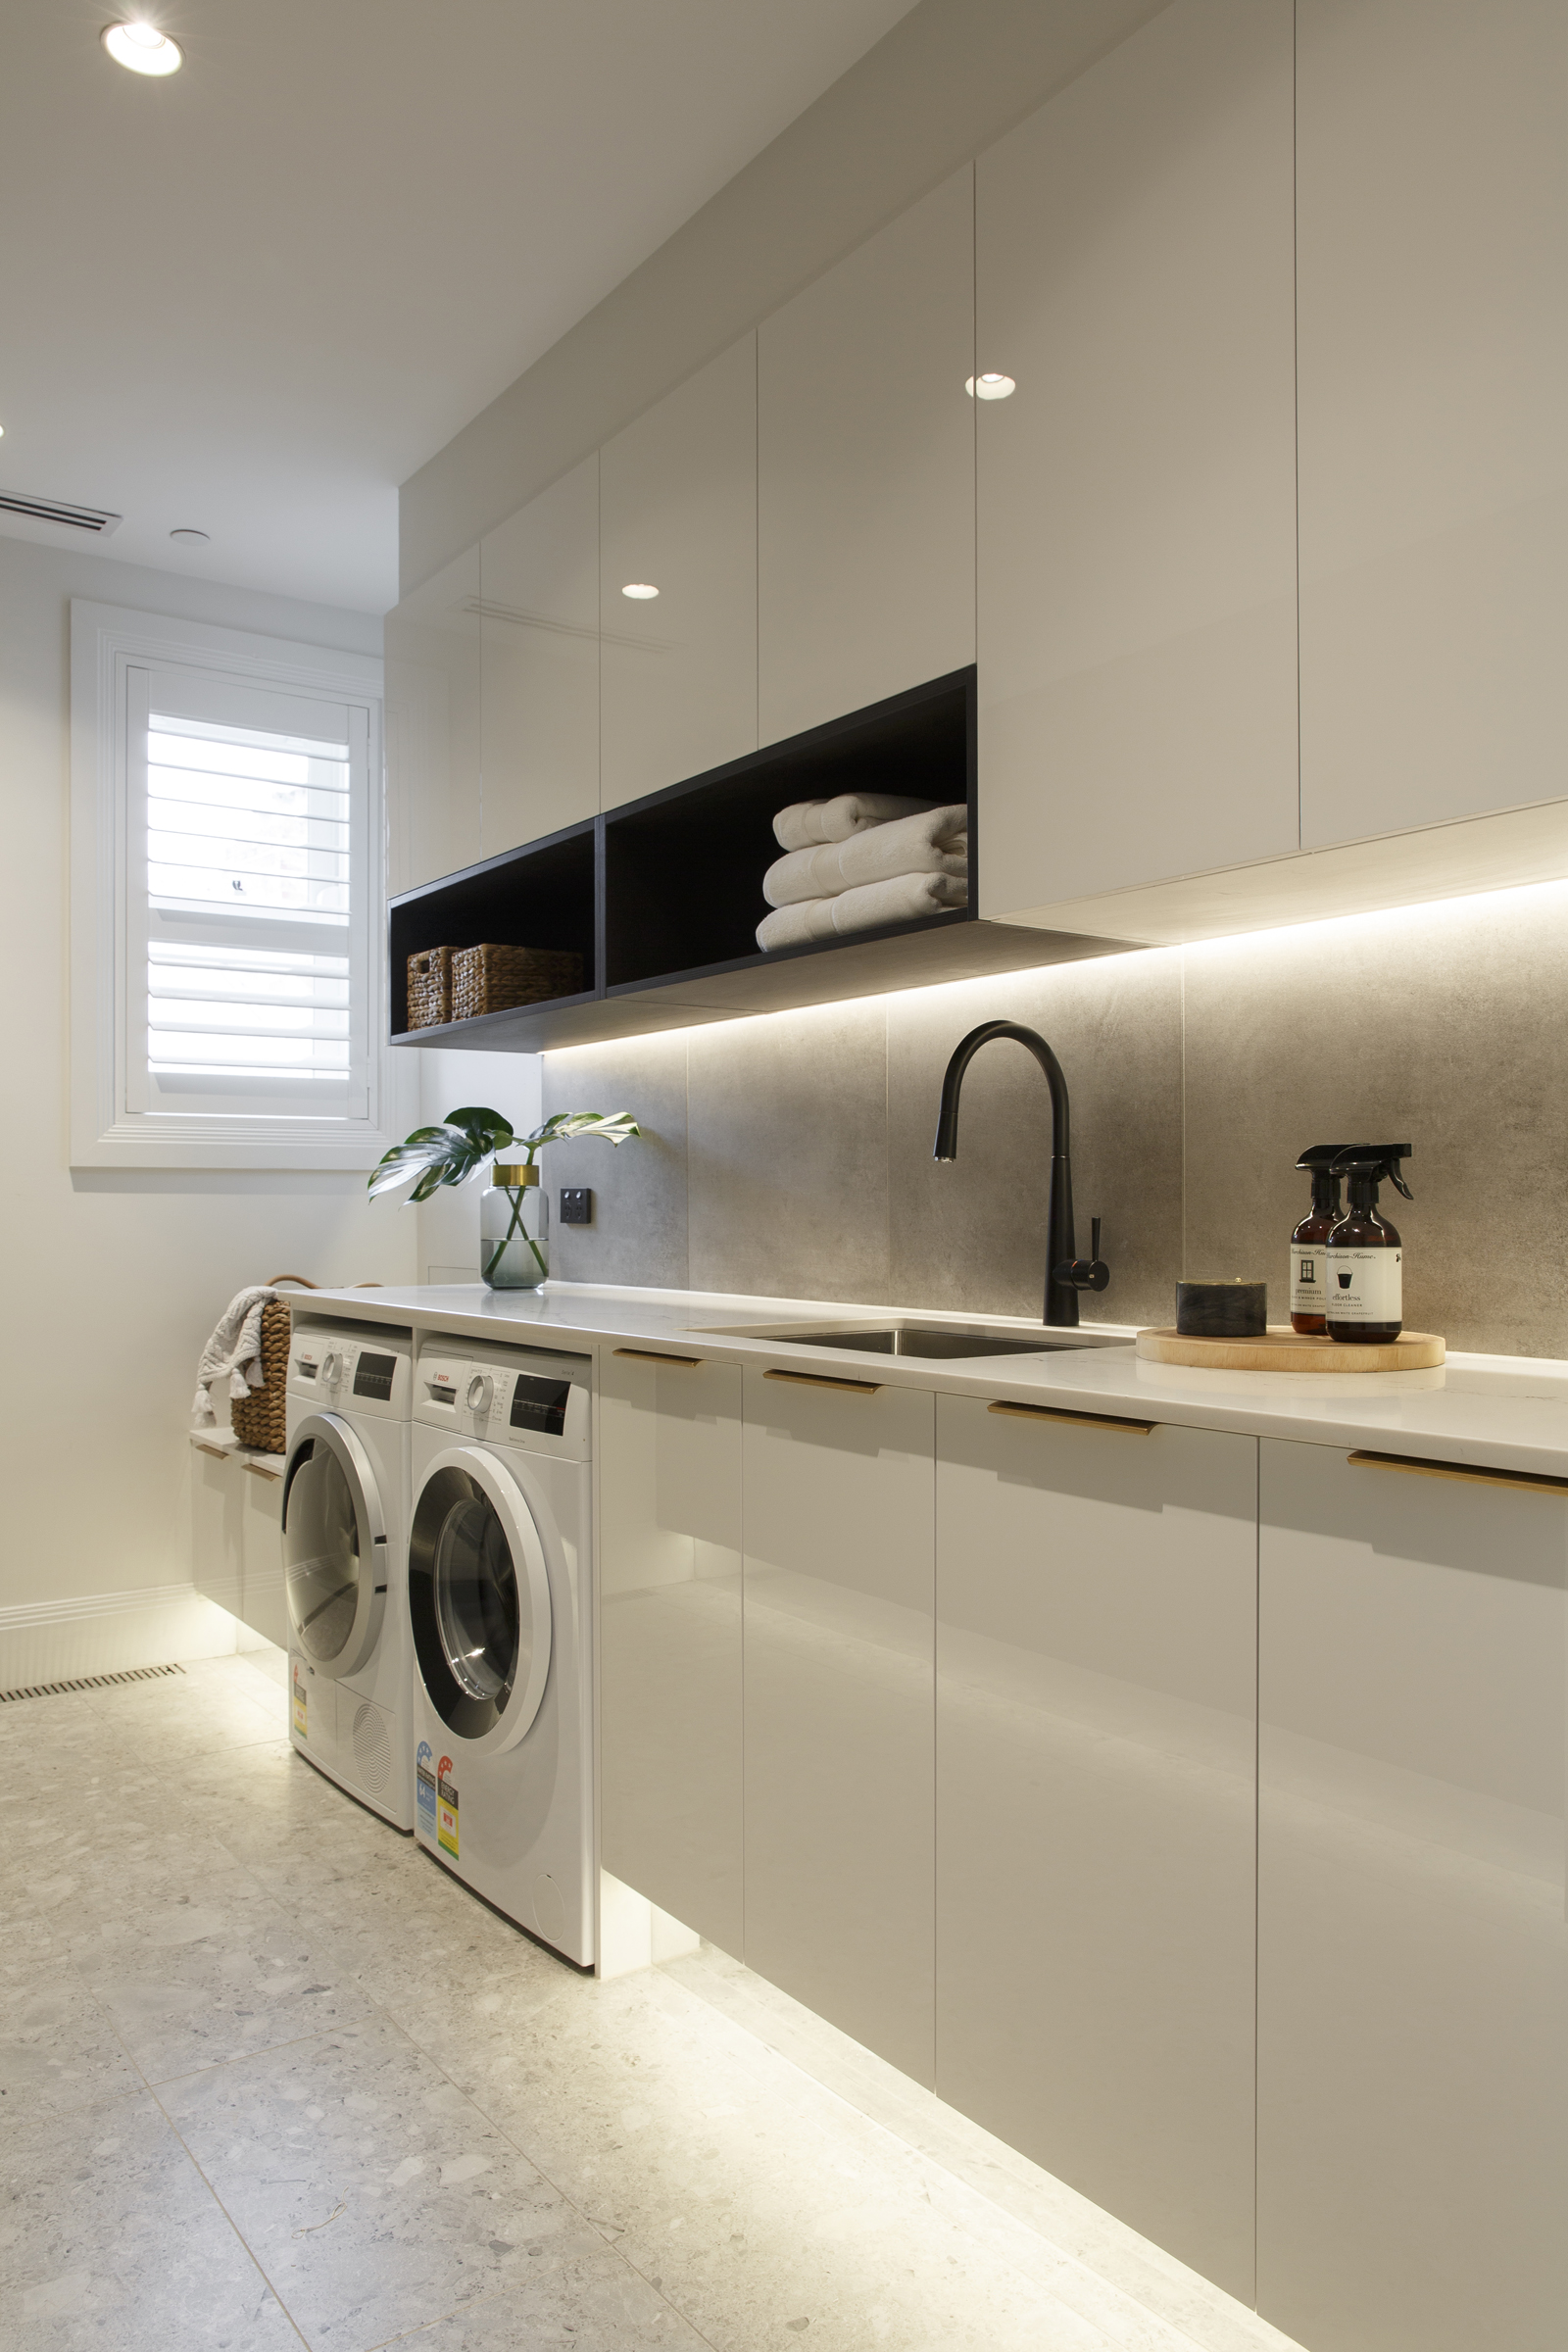 Laundry Design & Renovation | Laundry Room Ideas | Freedom Kitchens